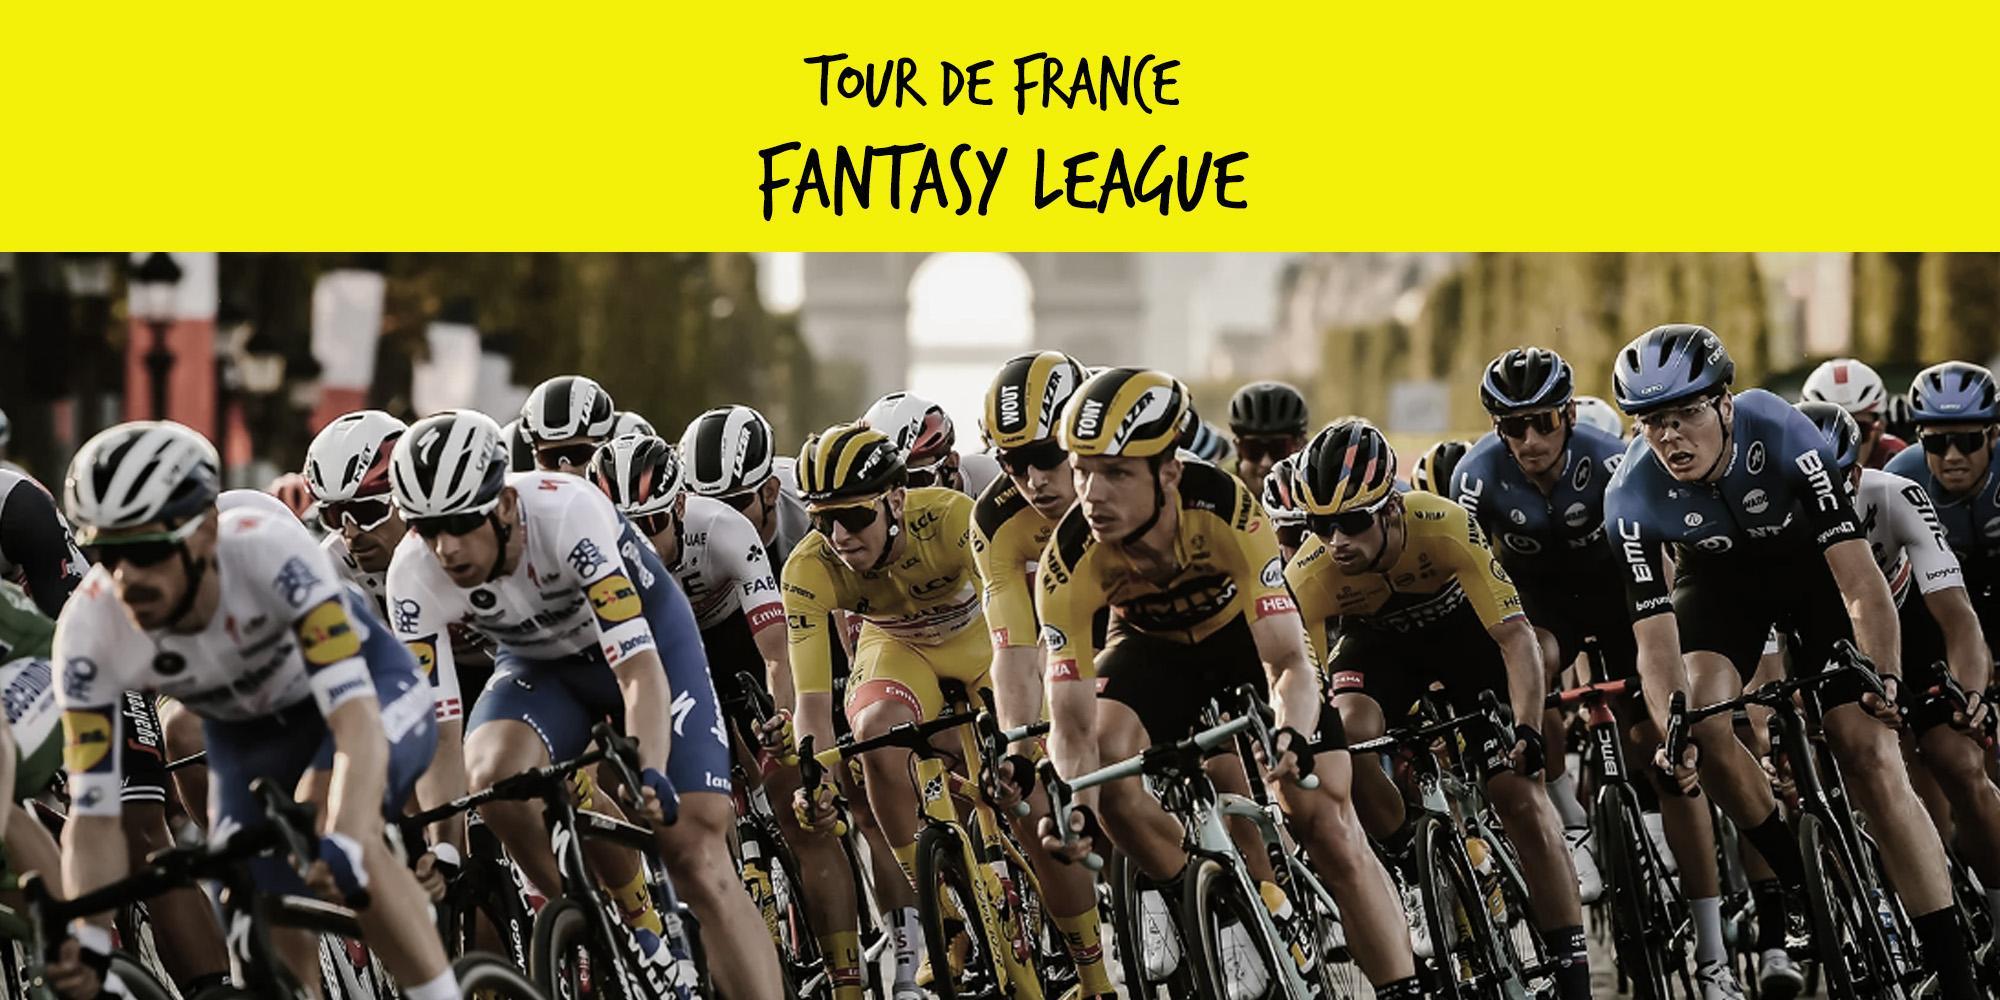 Join Bikes Palm Beach in the Tour de France Fantasy League